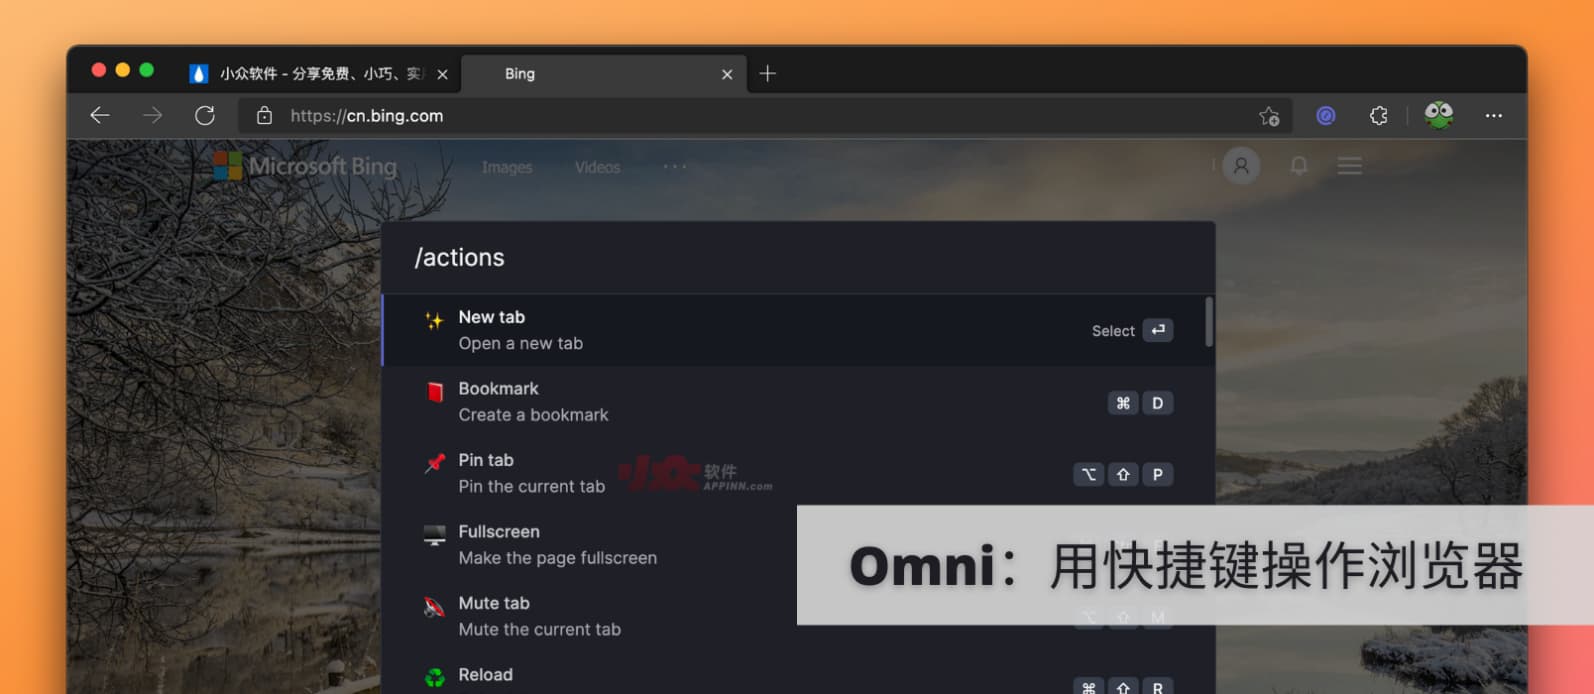 Omni - 50+ 功能，用快捷键操作浏览器：切换标签、书签、静音、录屏，整合 Notion、Figma 等服务